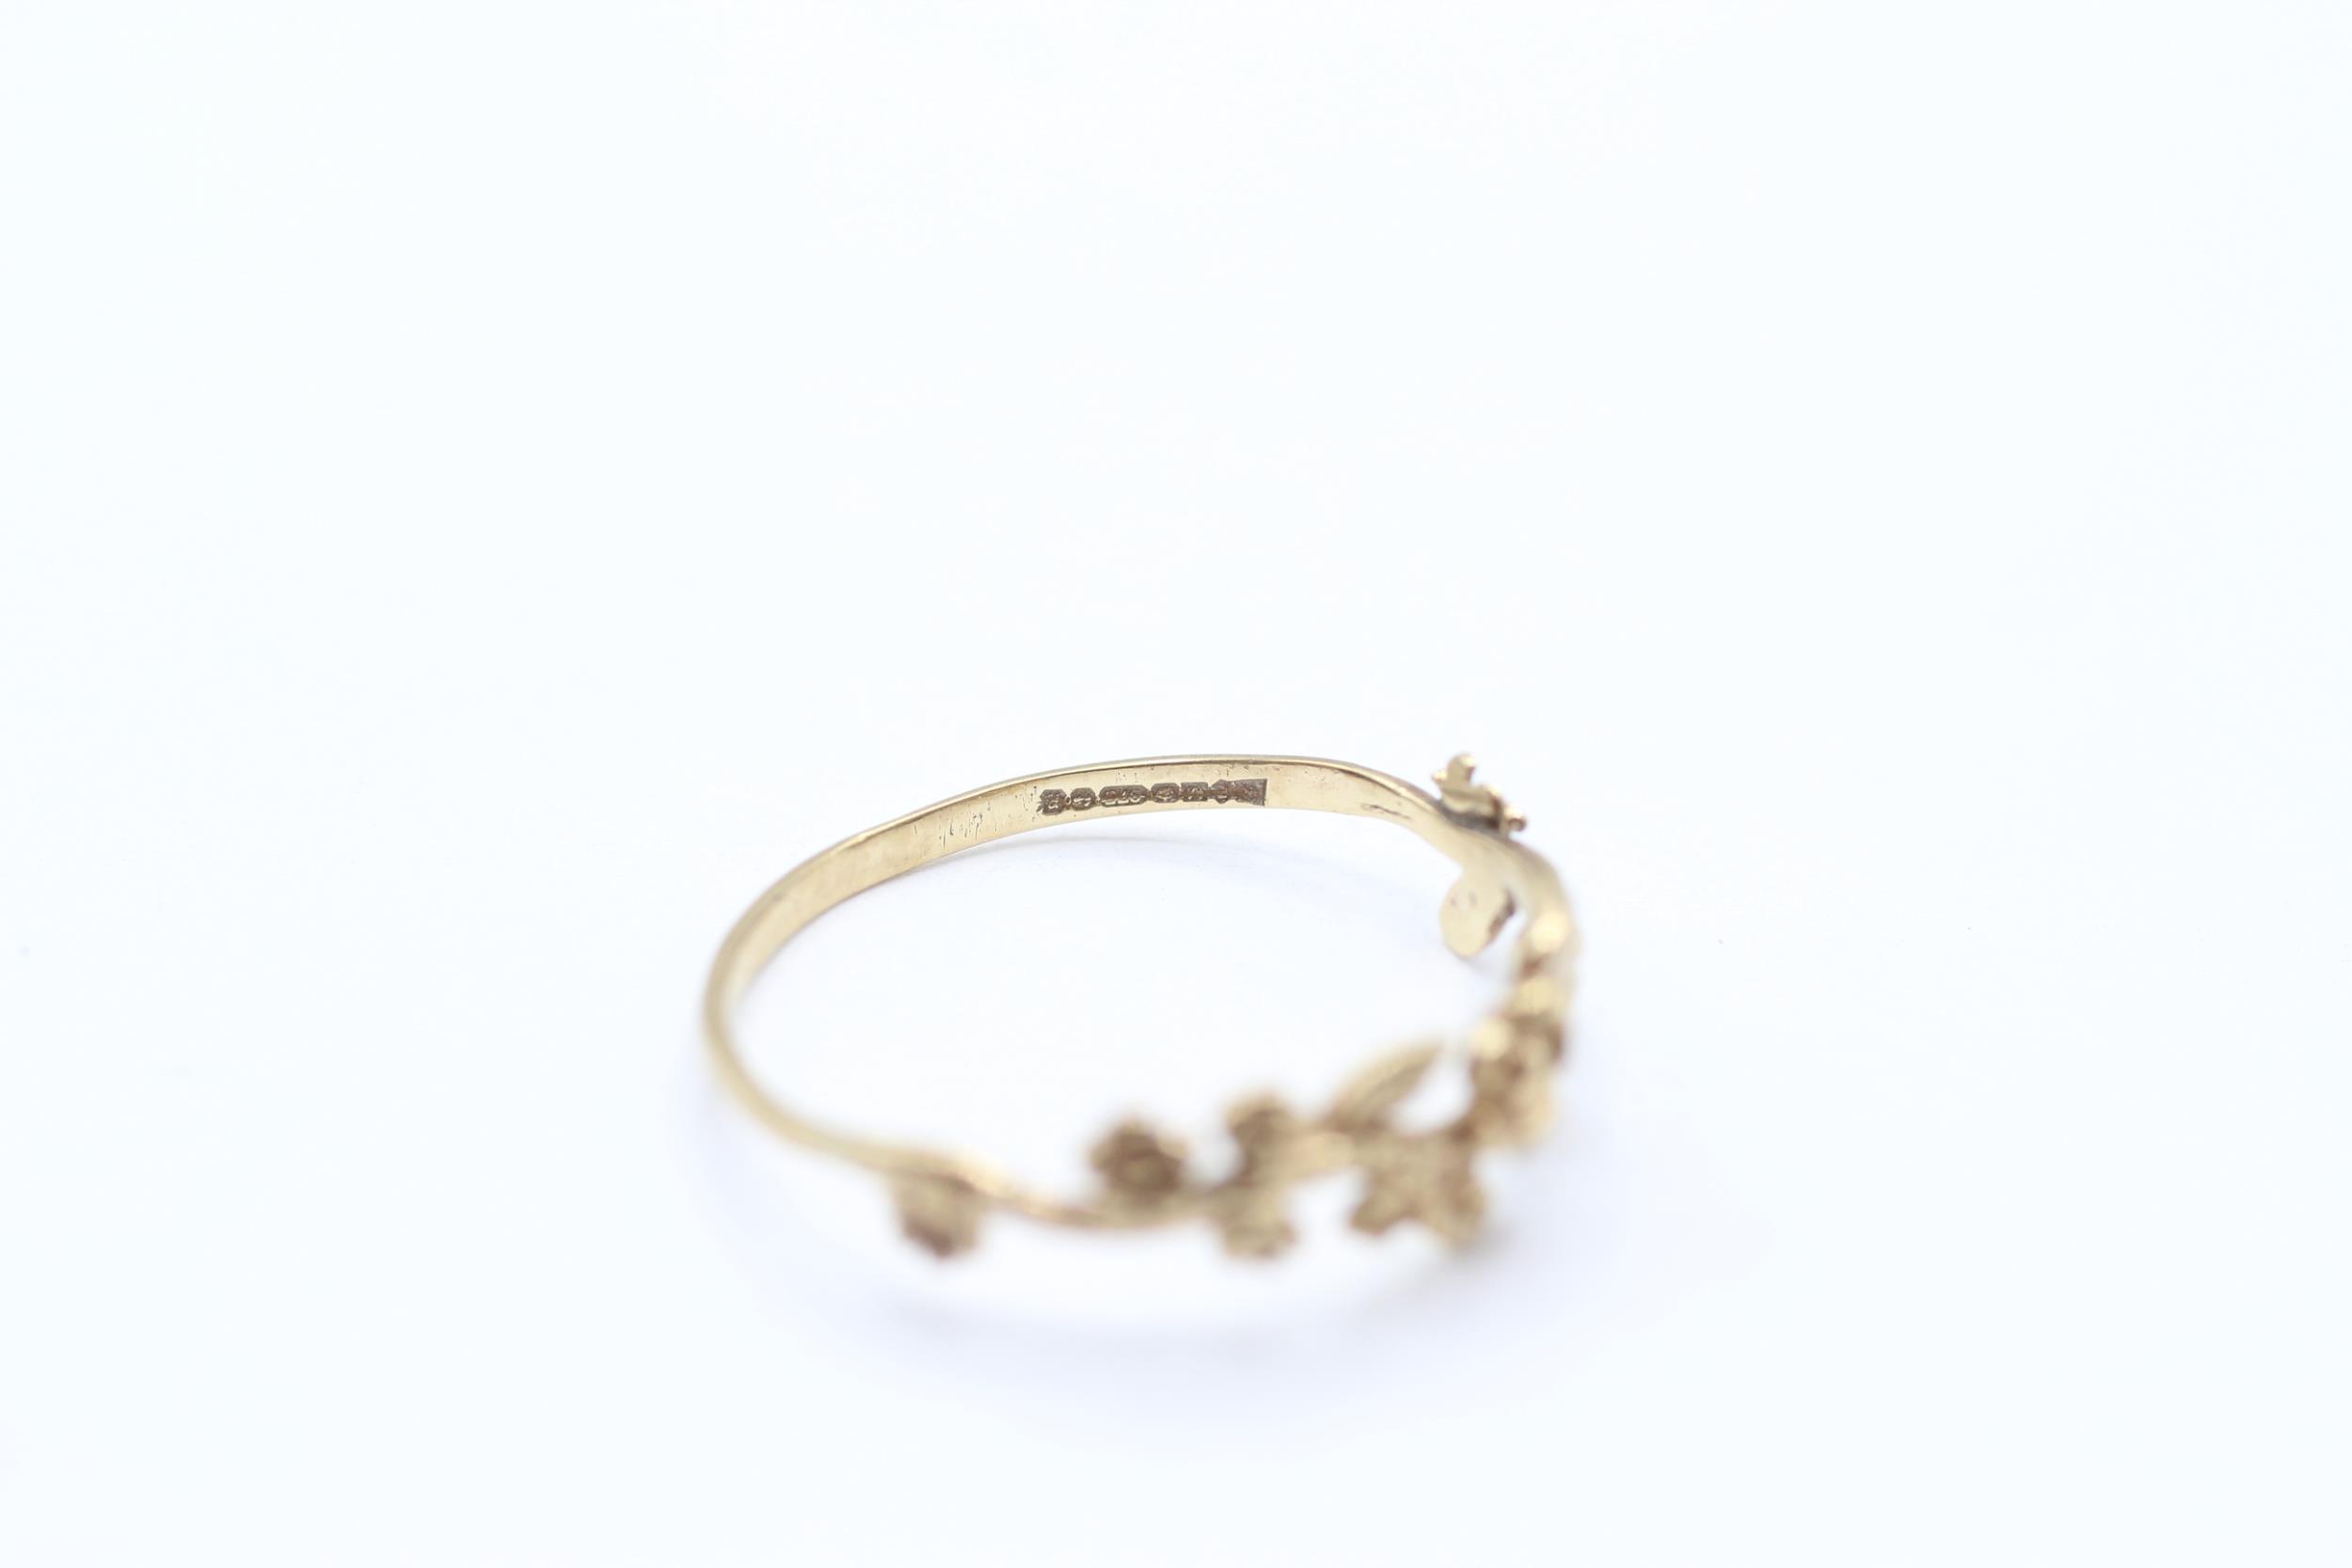 9ct gold vintage floral patterned ring Size O 1 g - Image 3 of 5